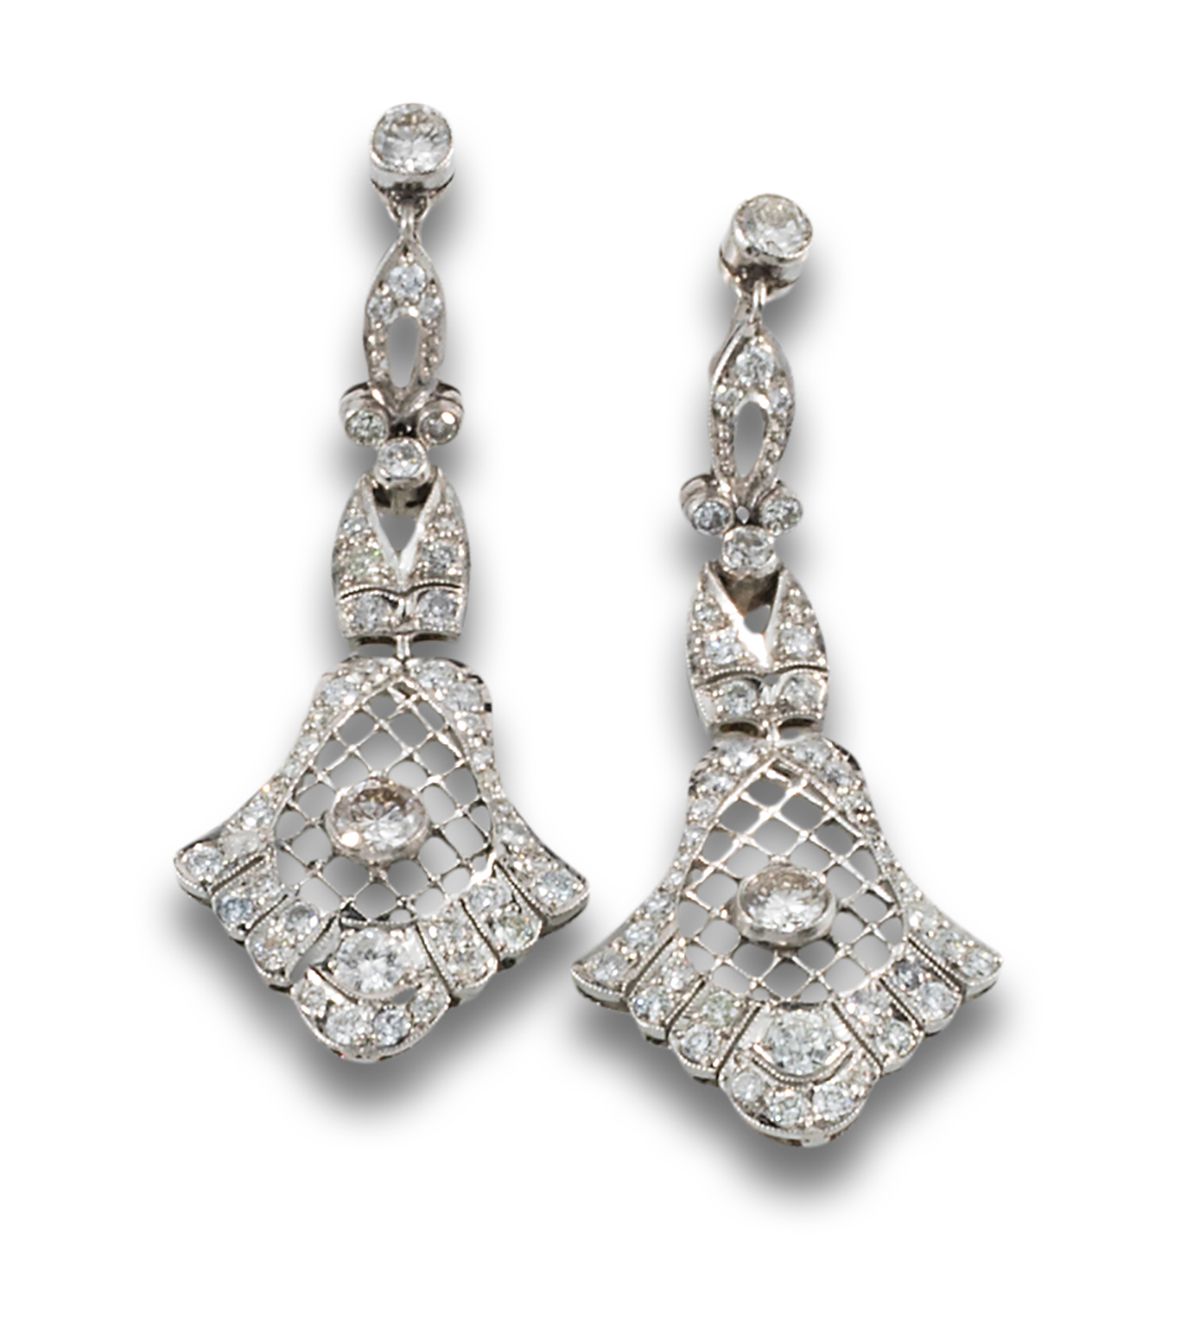 Long earrings, Art Deco style made in platinum. Durchbrochene Diamanten im Alt- &hellip;